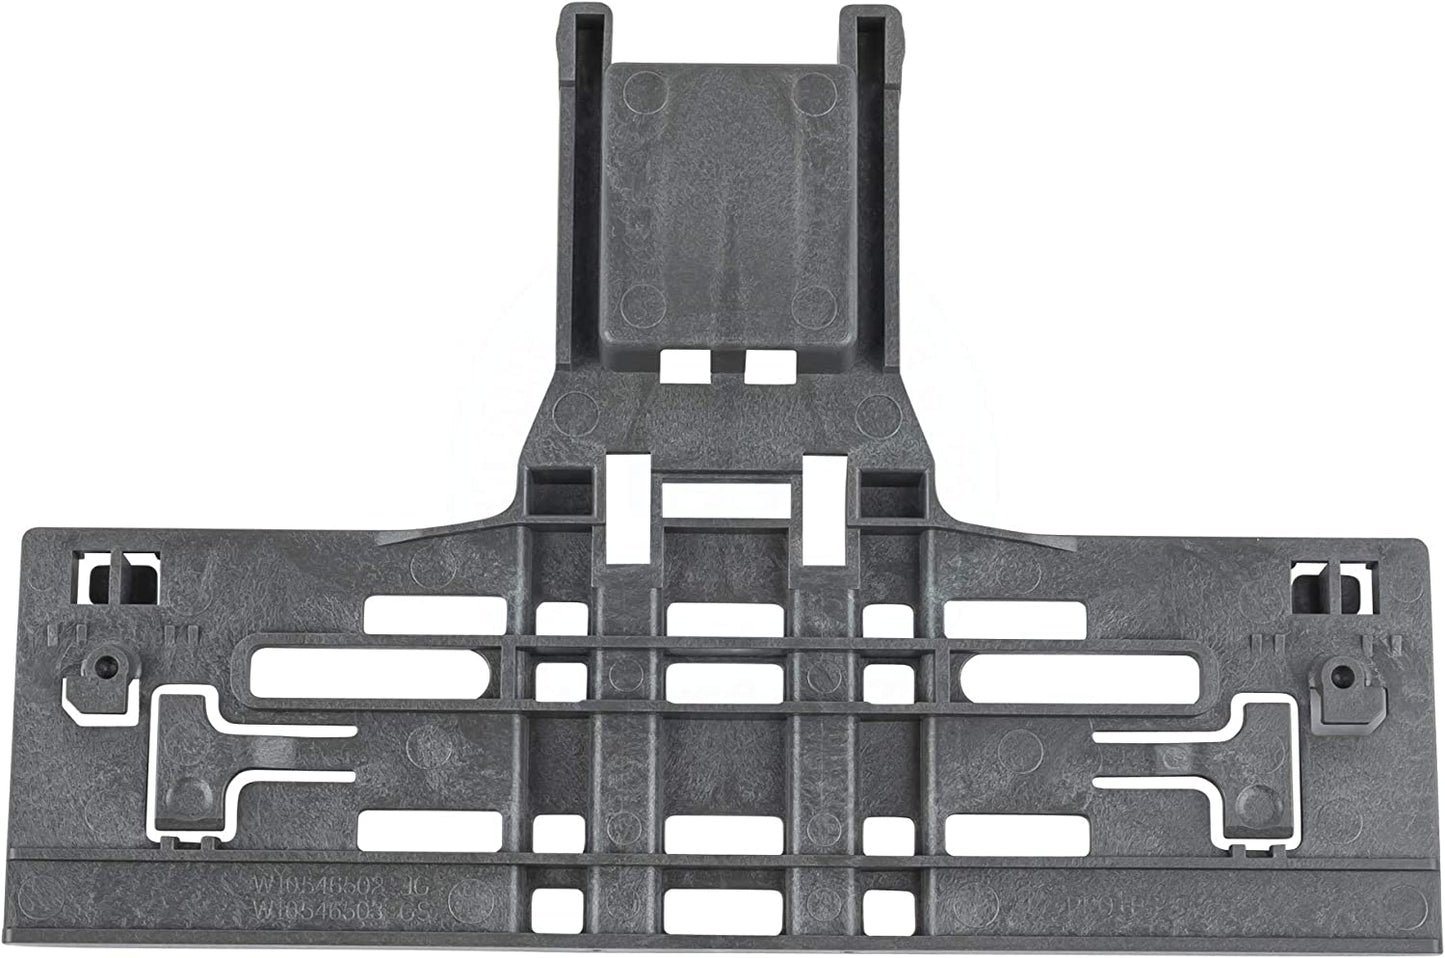 W10546503 Upper Rack Adjuster Compatible with Whirlpool KitchenAid Dishwasher - WPW10546503